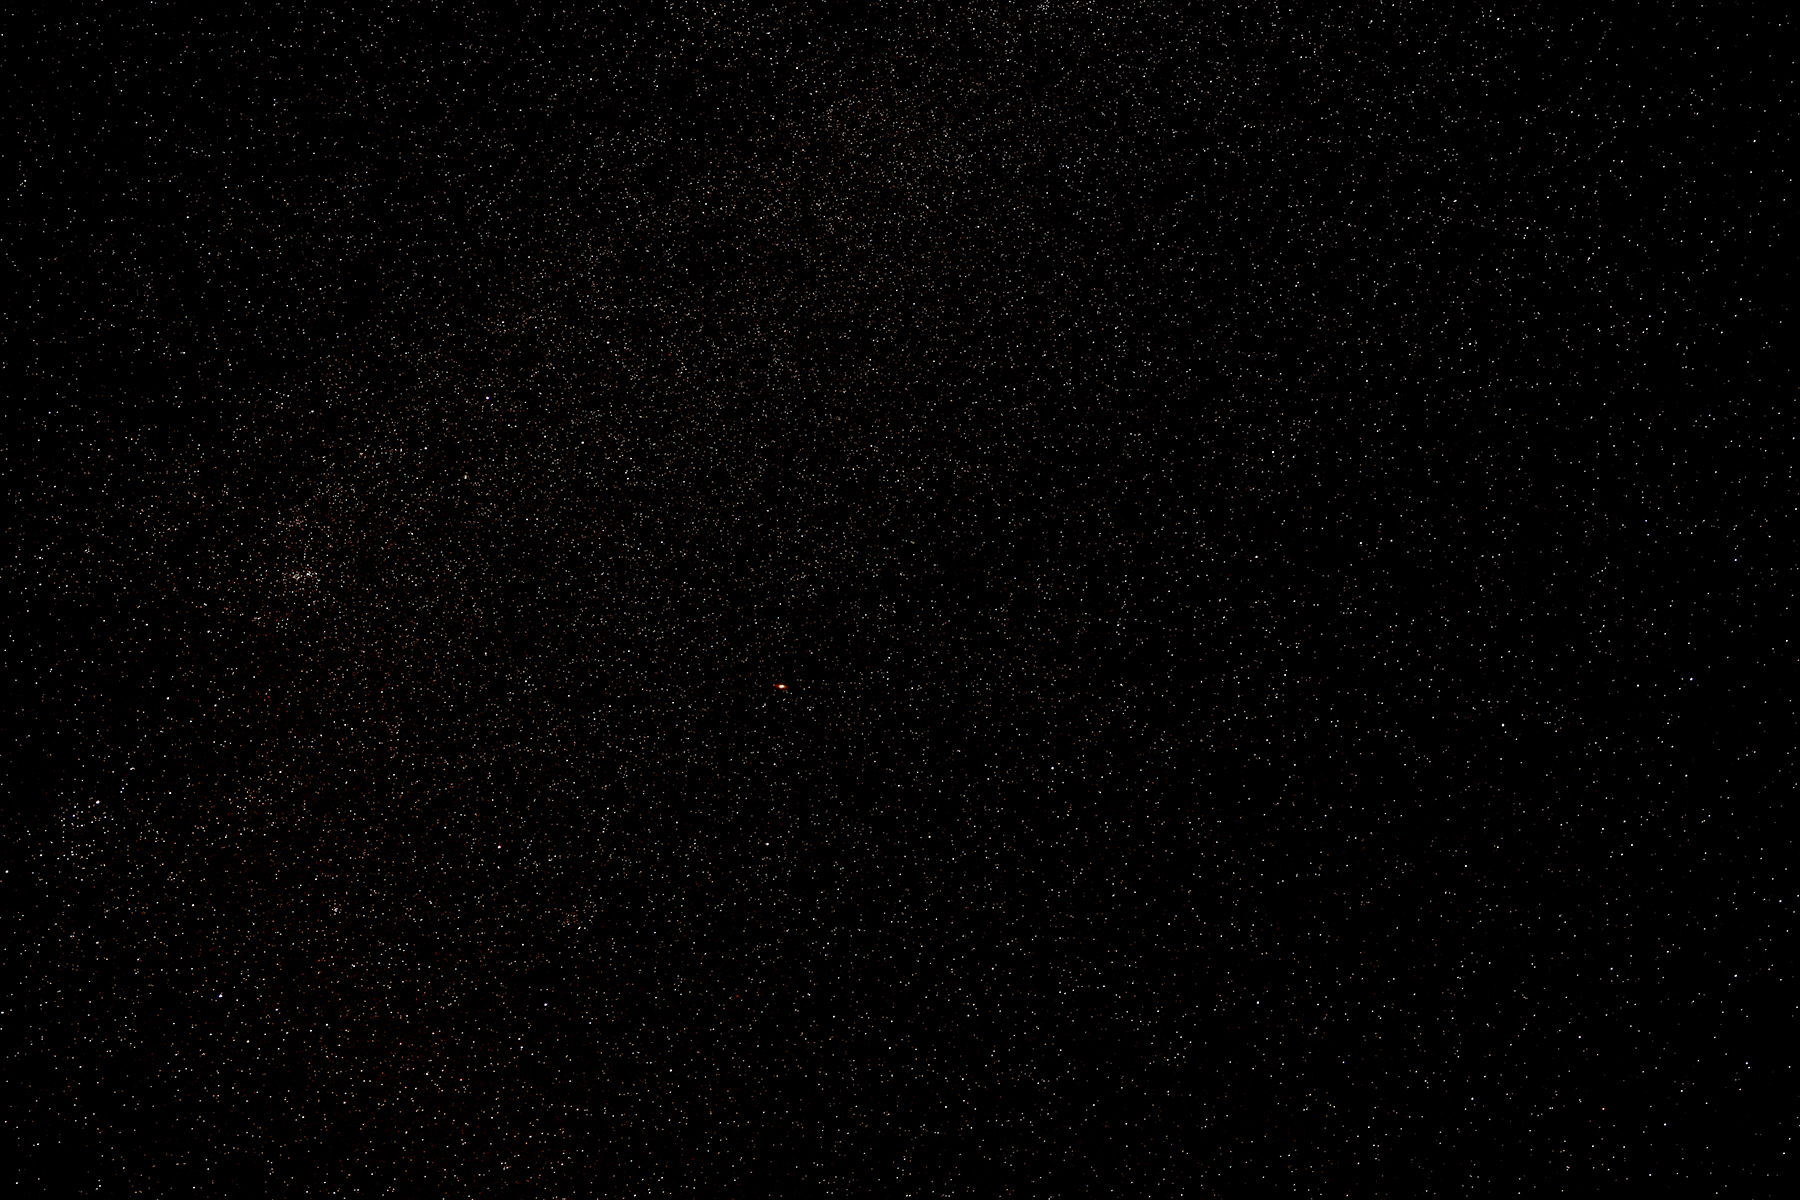 Sternenhimmel mit Andromeda-Nebel fotografiert mit Sigma 14-24 mm Arts